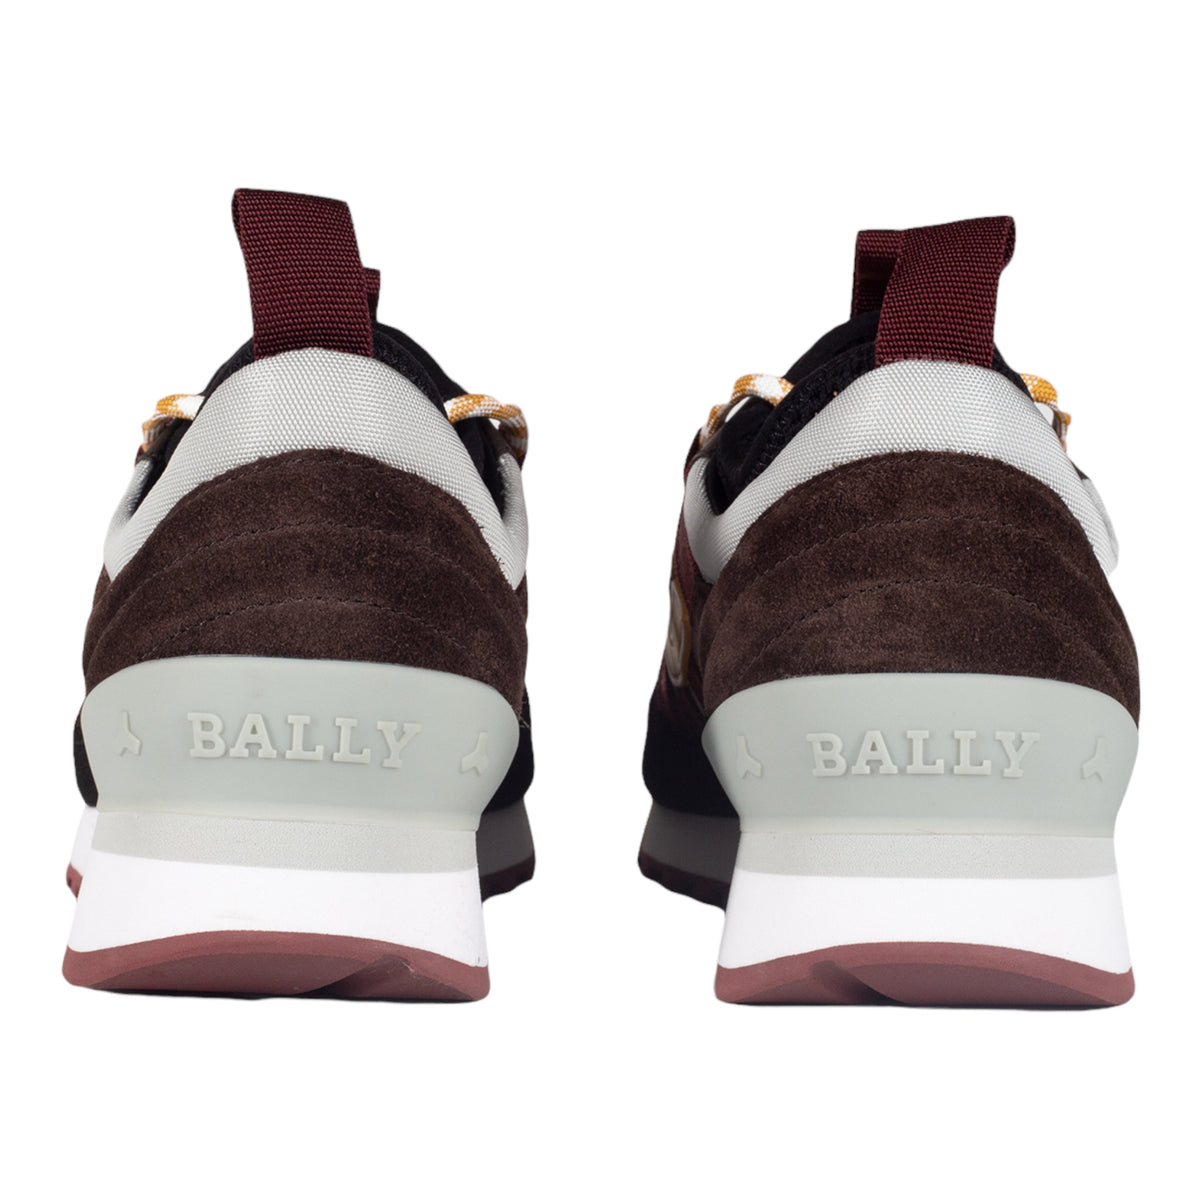 Bally Men's Glick Sneakers